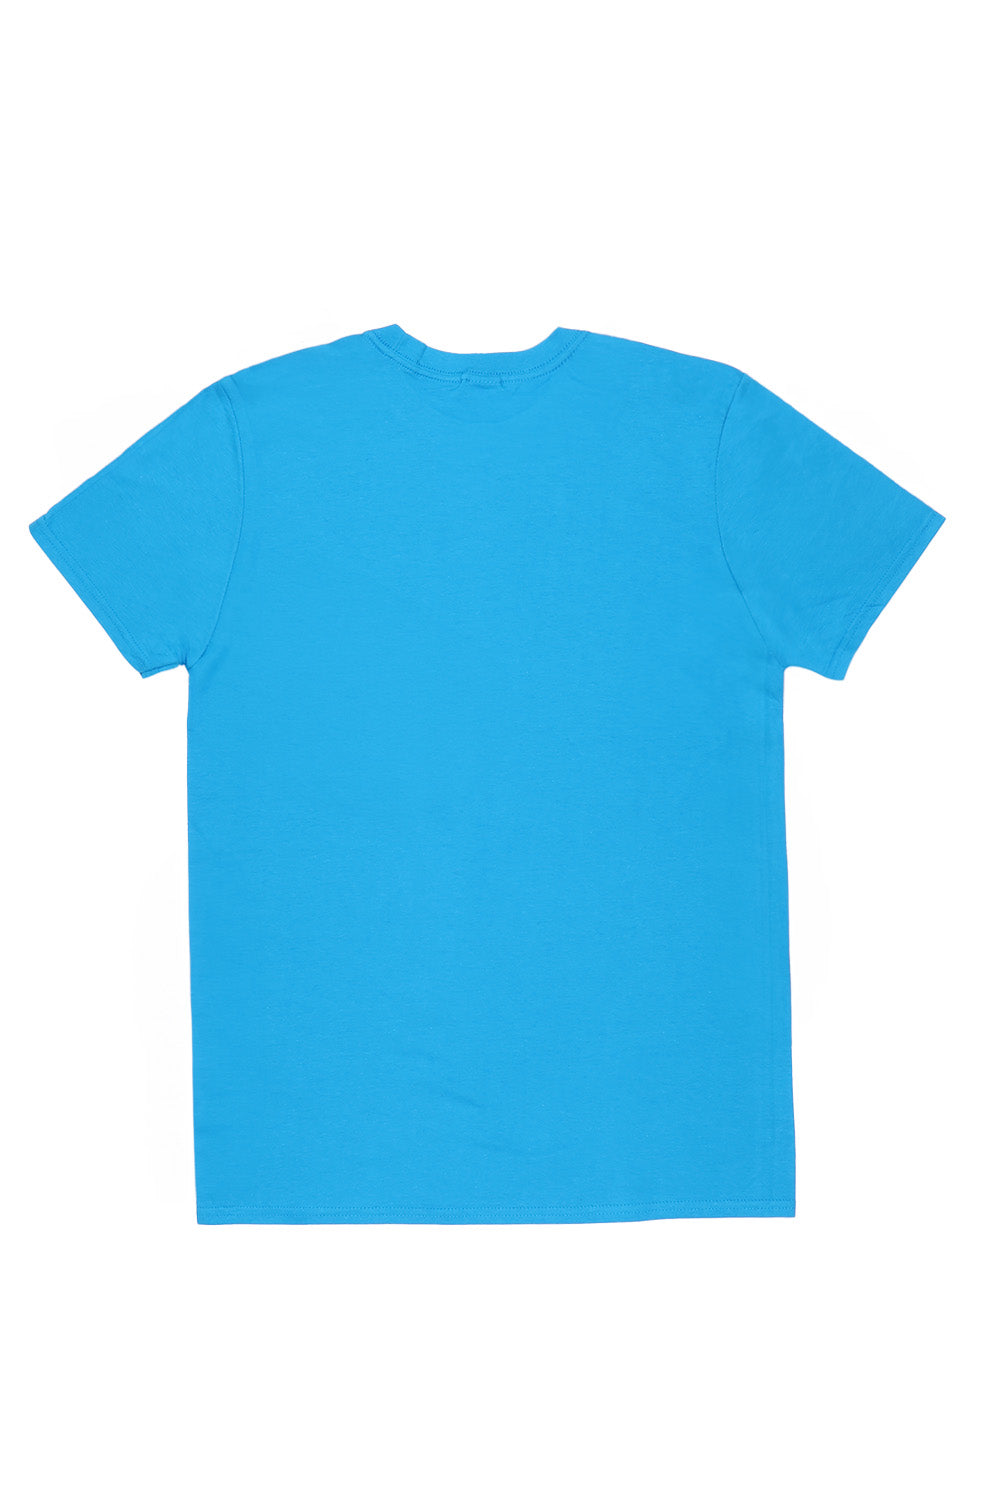 LA T-Shirt in Sapphire Blue (Custom Packs)